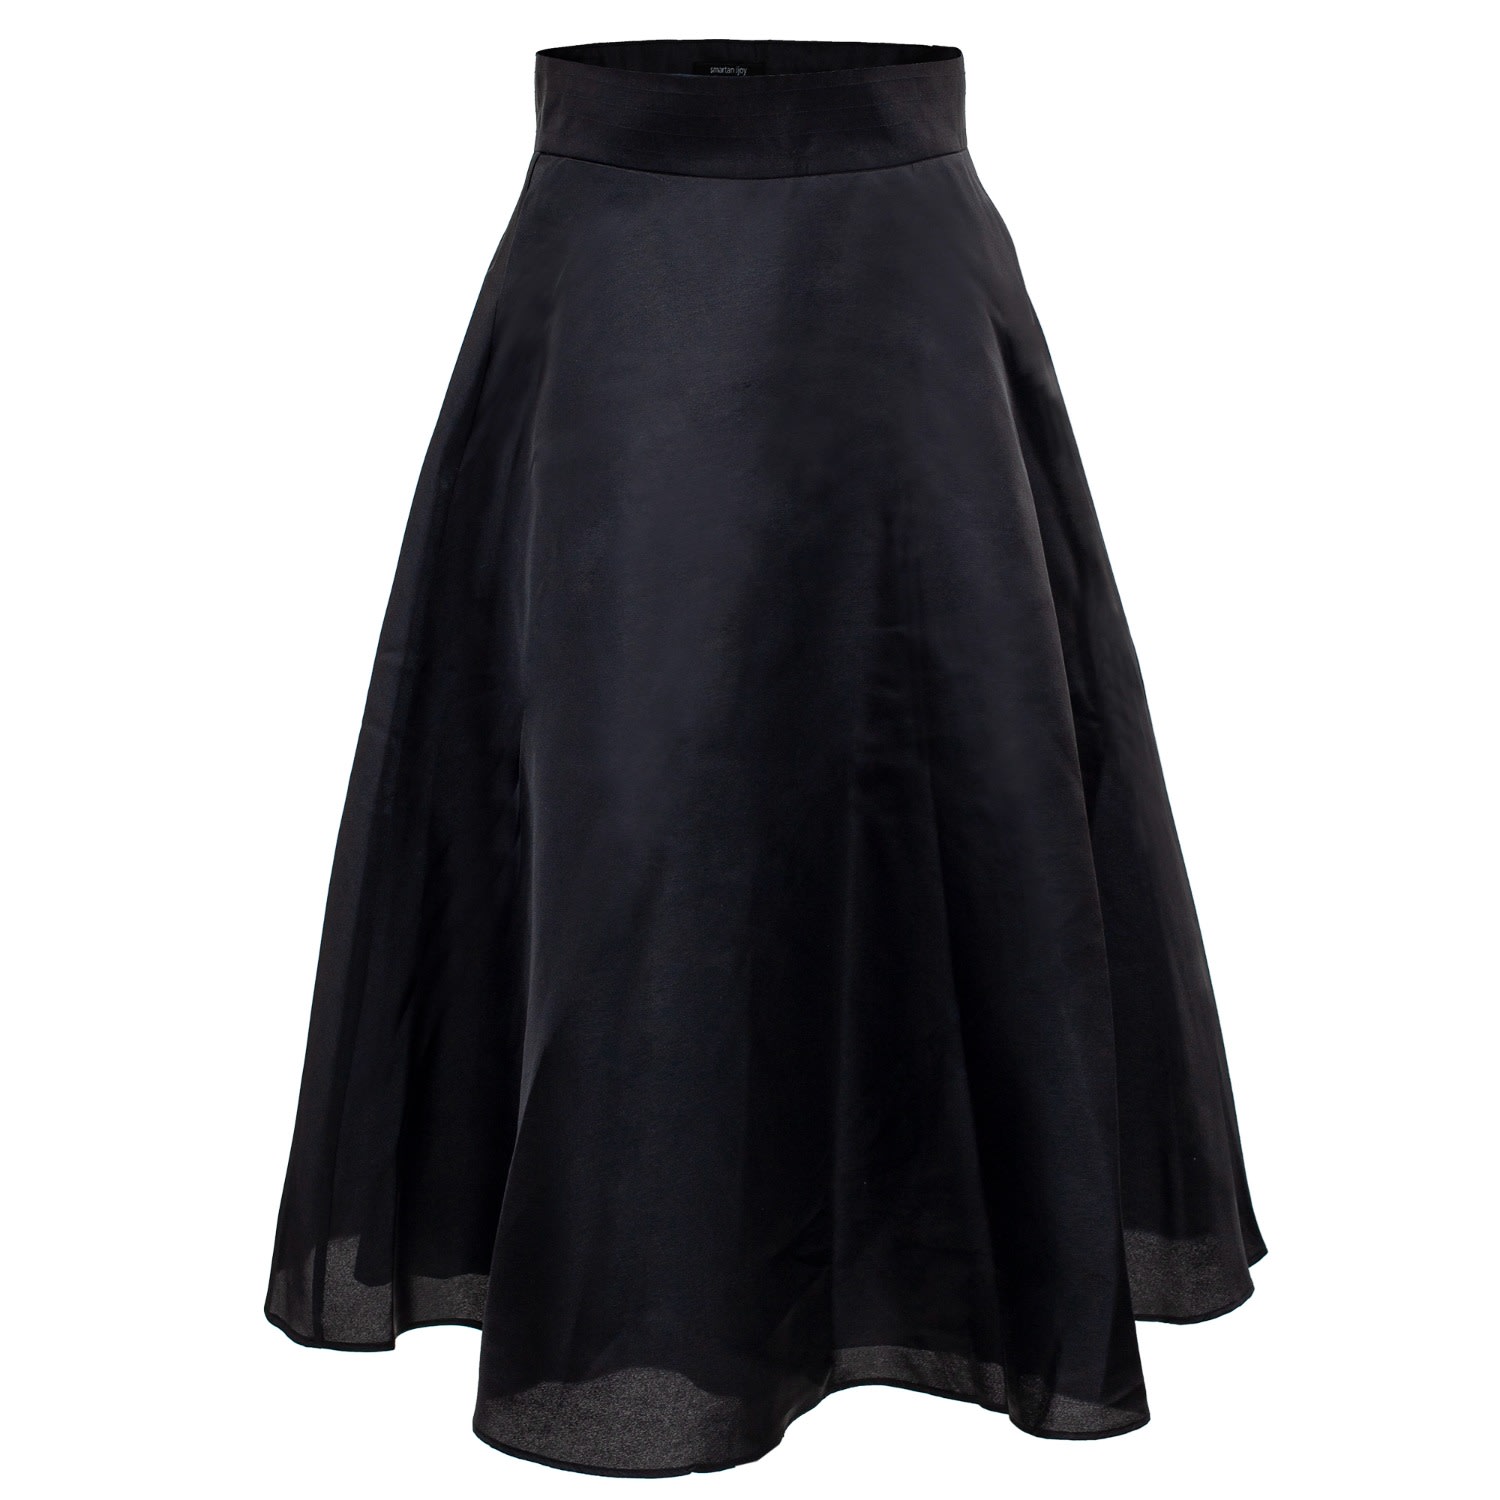 Women’s Flared Taffeta Skirt - Black Extra Small Smart and Joy